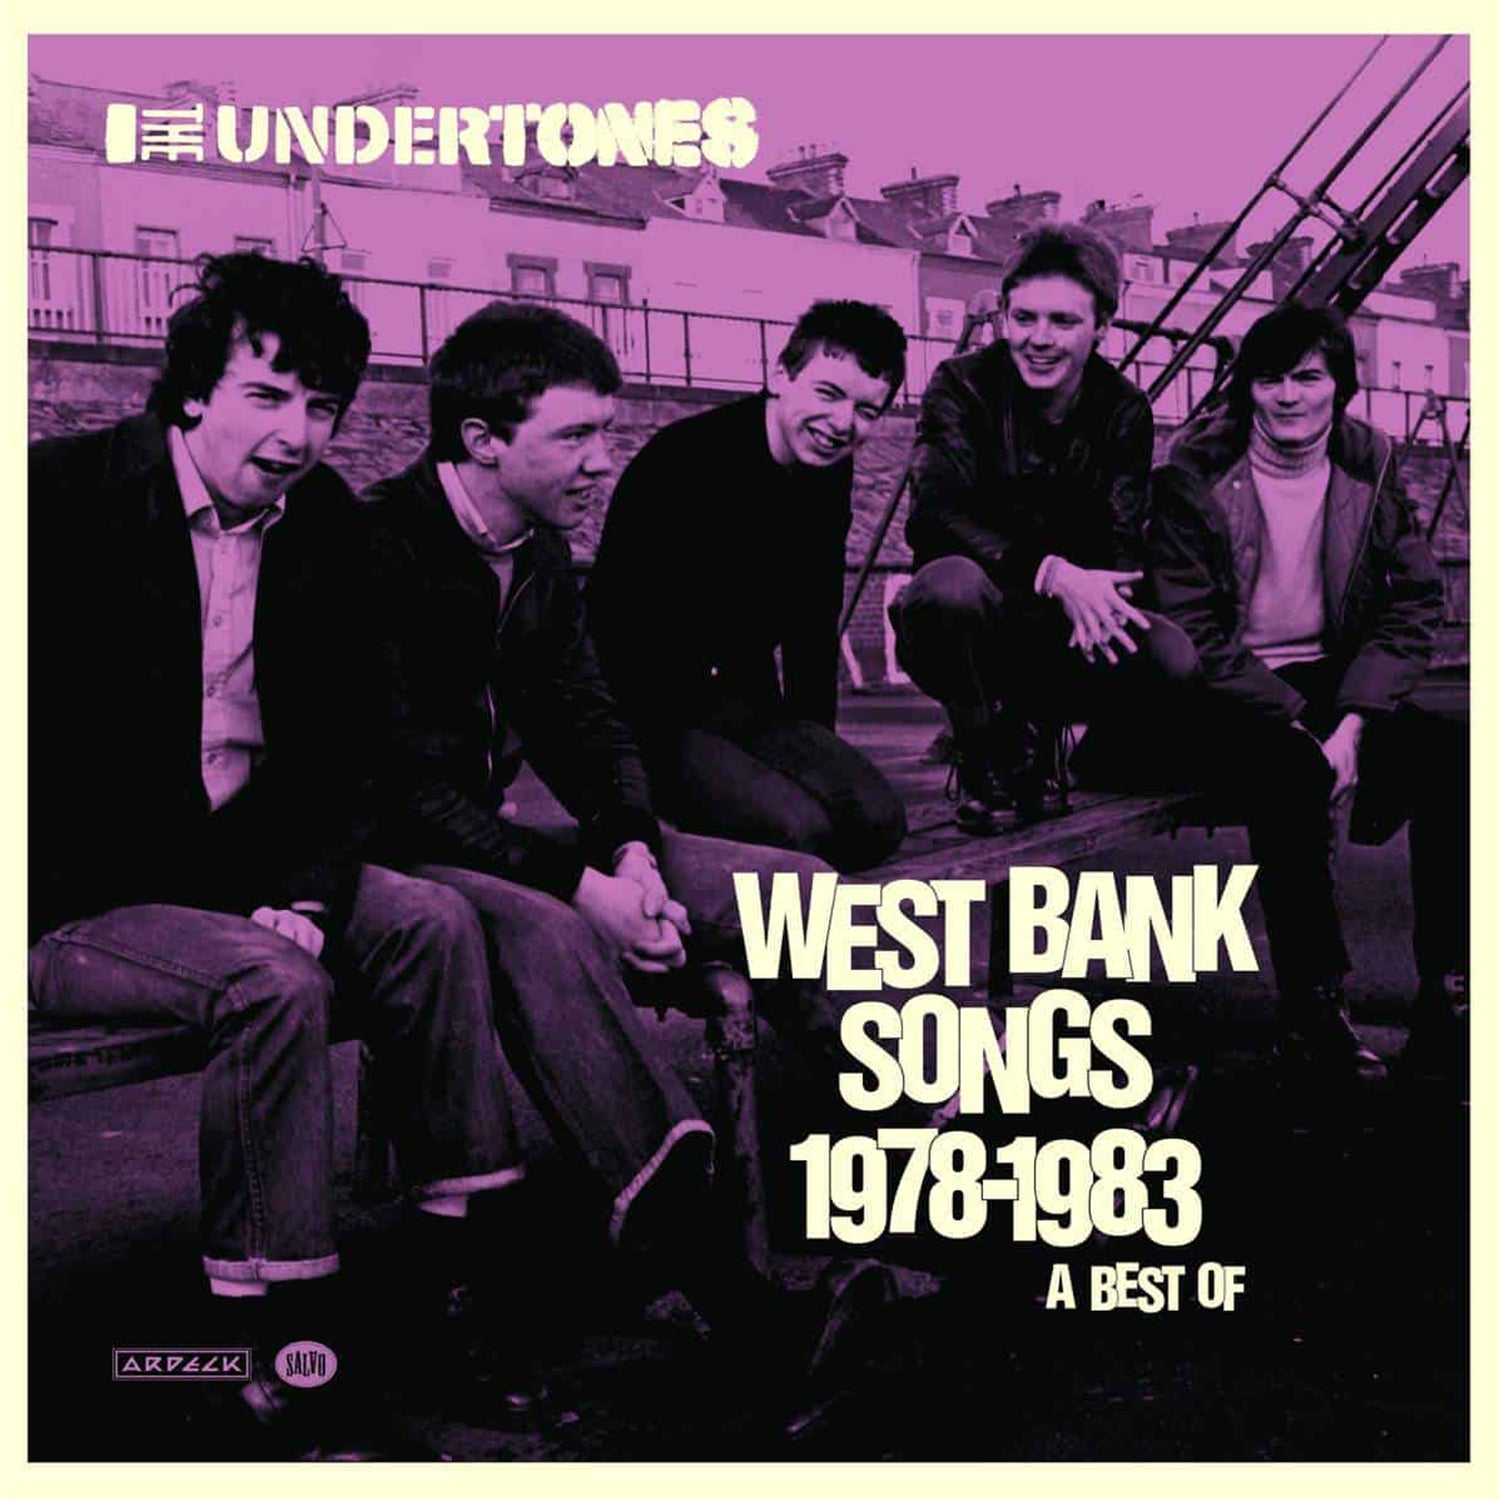 THE UNDERTONES - West Bank Songs 1978-1983: A Best Of - 2CD